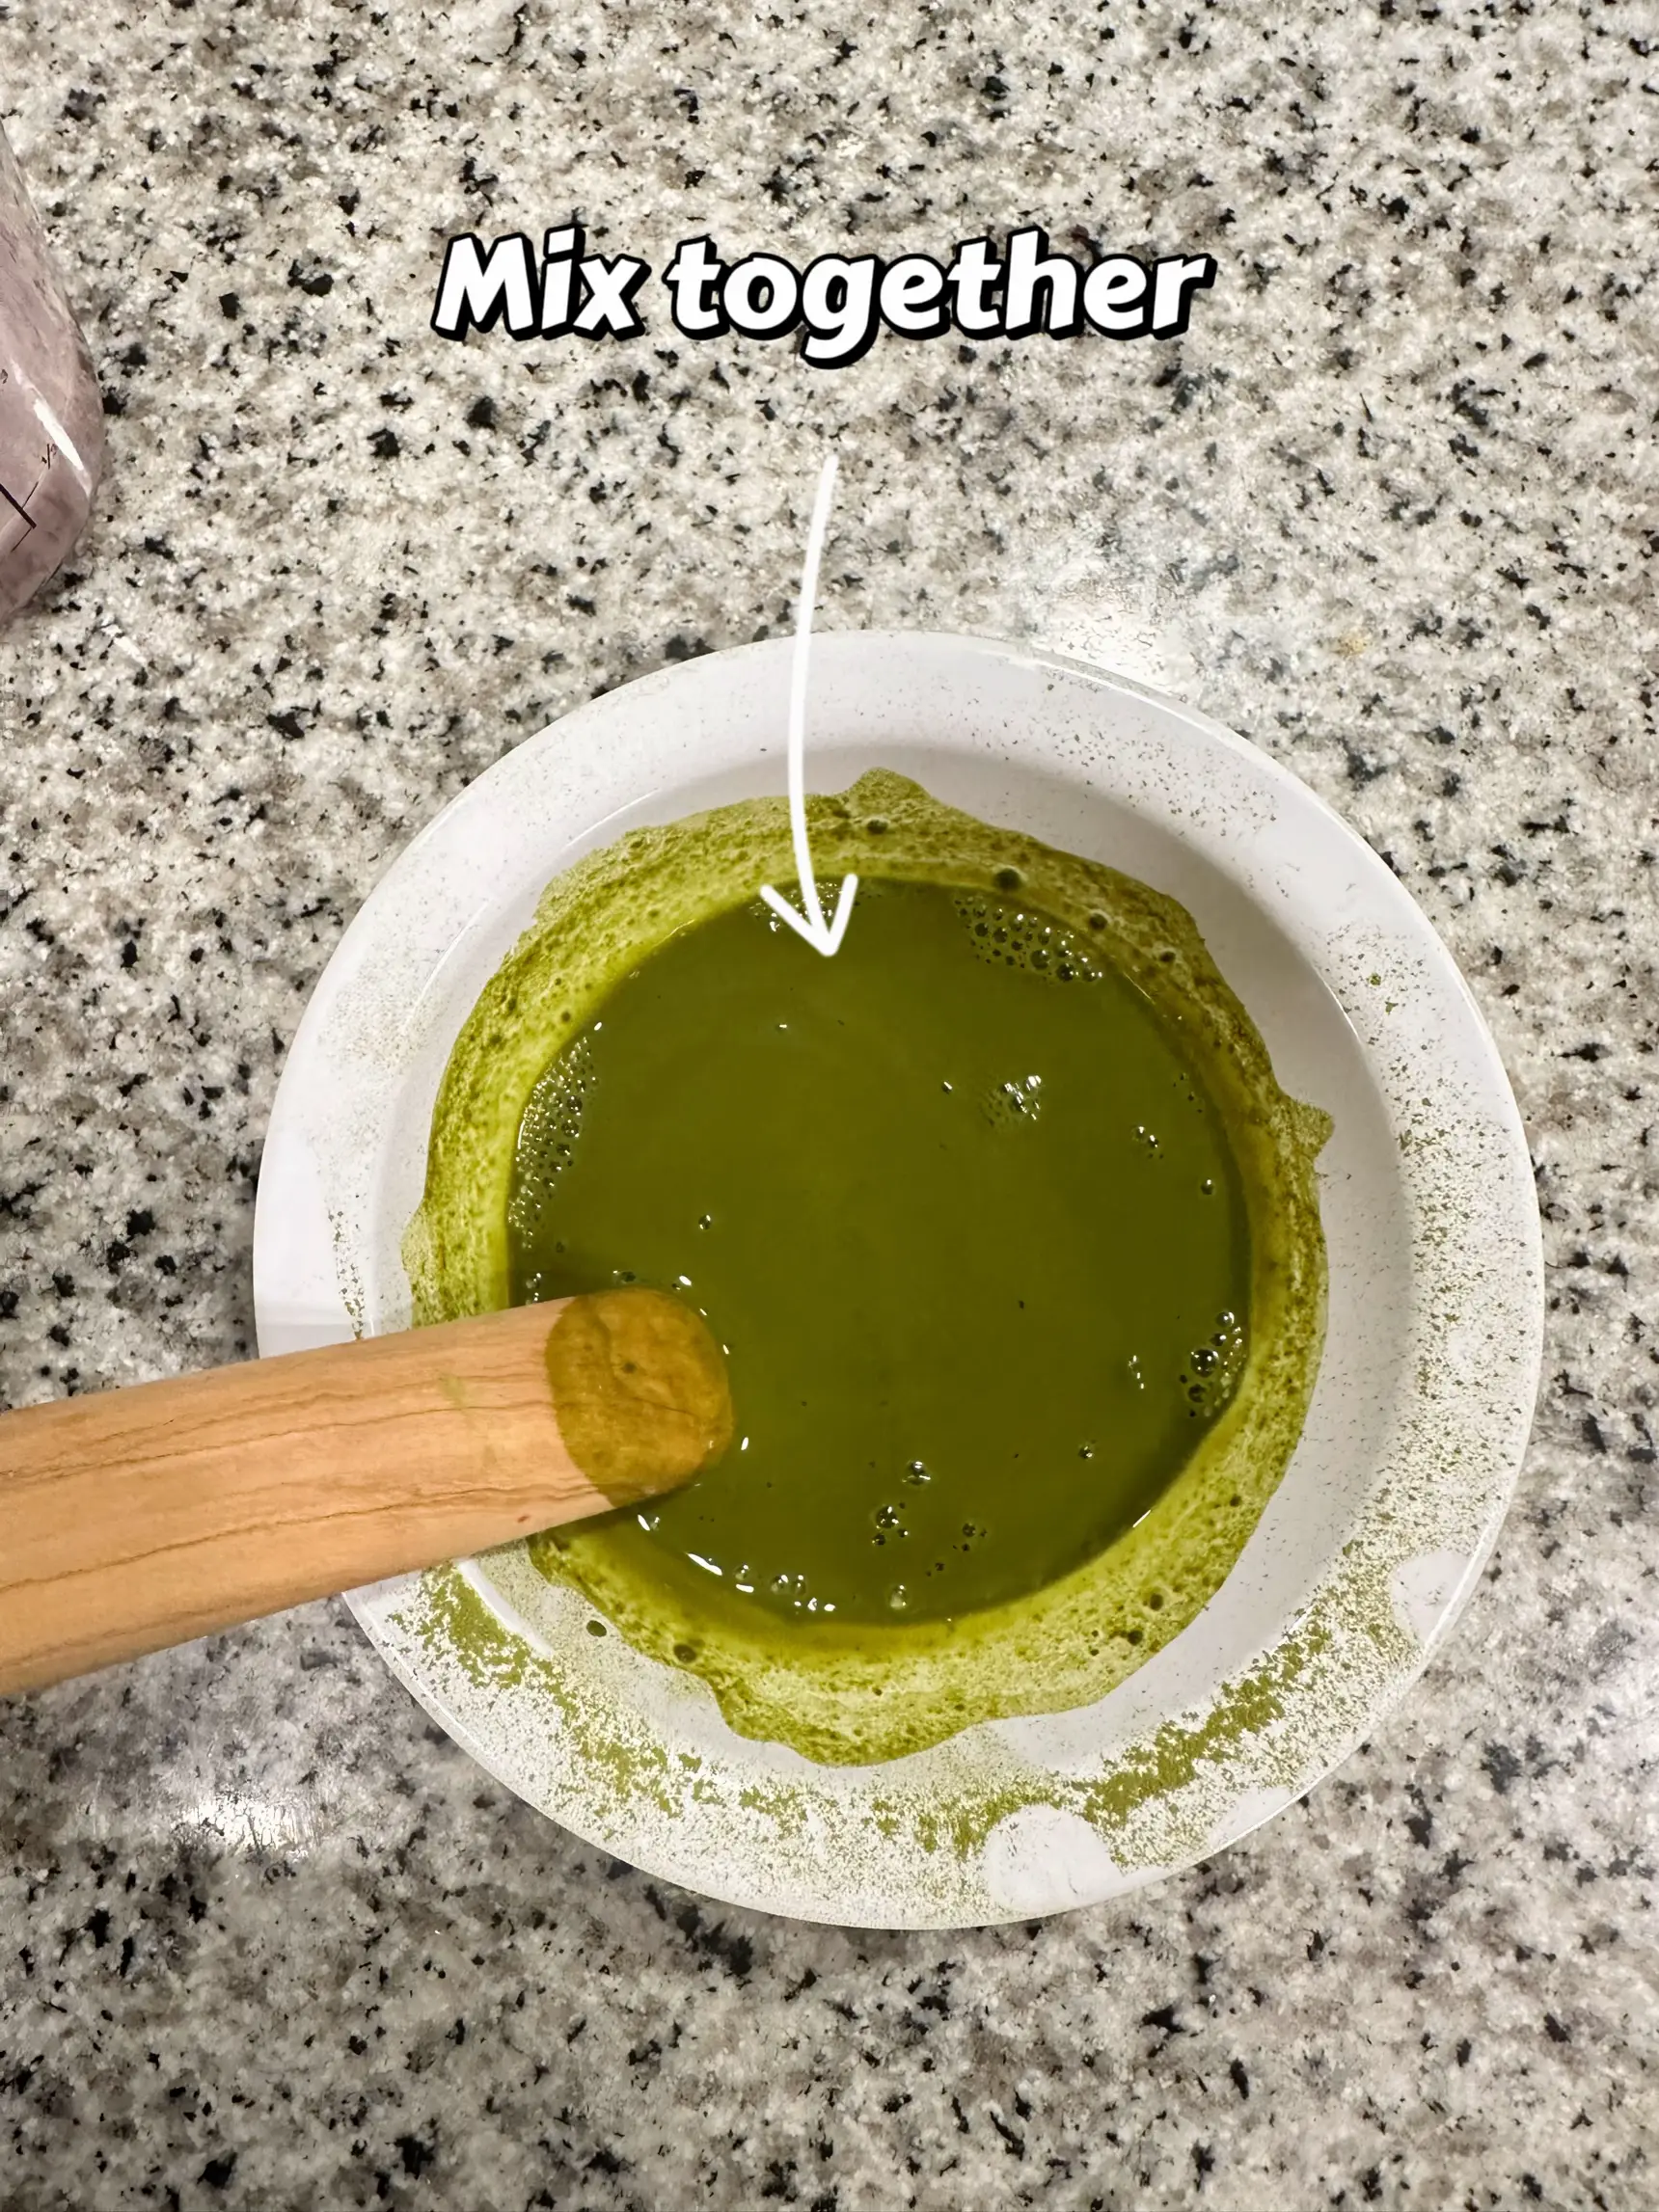 Jade Leaf Classic Culinary Matcha Green Tea Powder Mix - 1oz